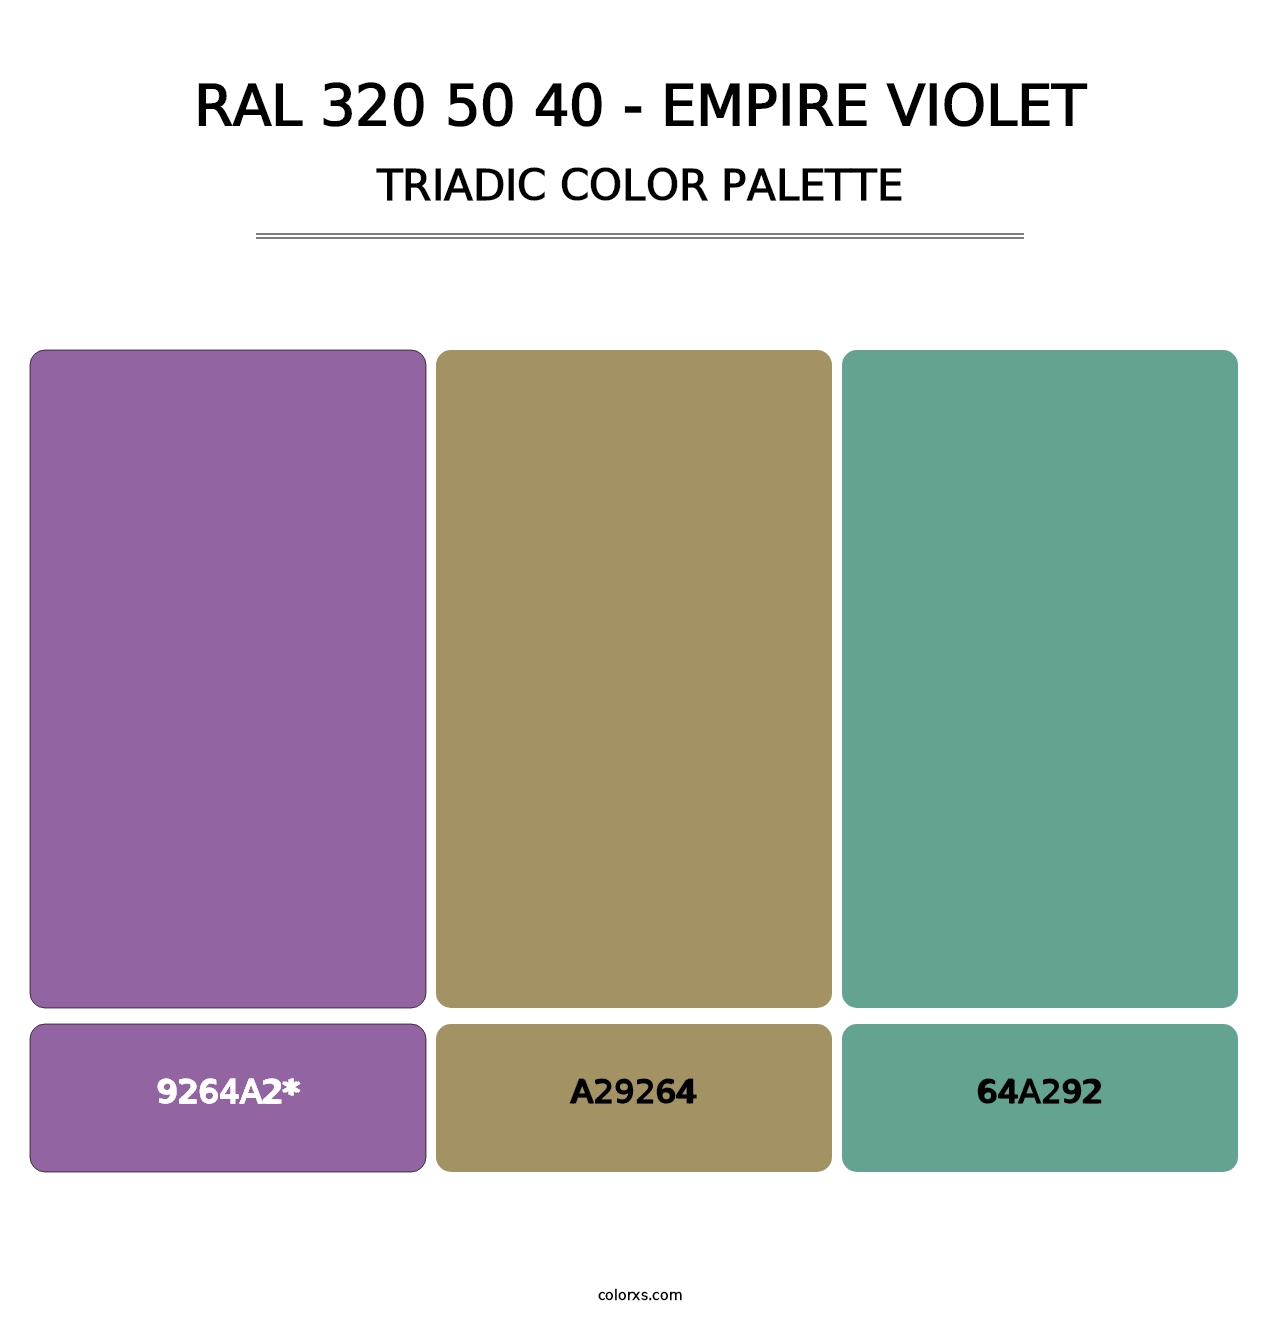 RAL 320 50 40 - Empire Violet - Triadic Color Palette